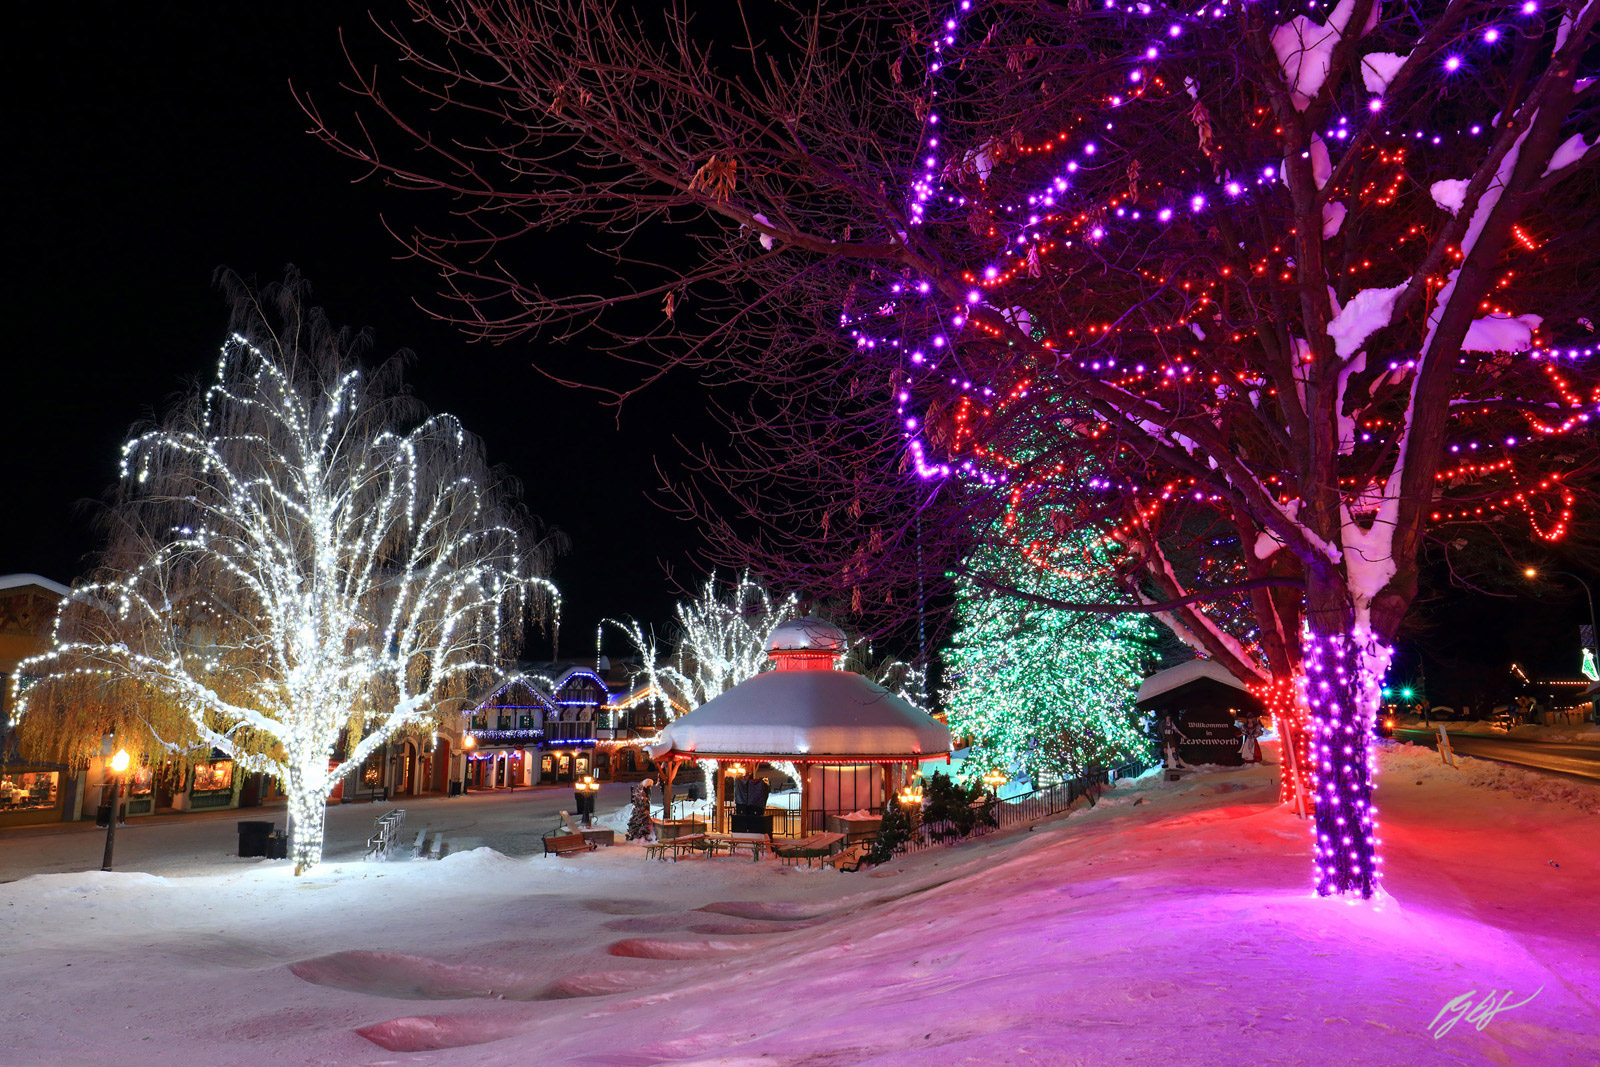 Holiday Lights on Display in Bavarian Village of Leavenworth in Washington